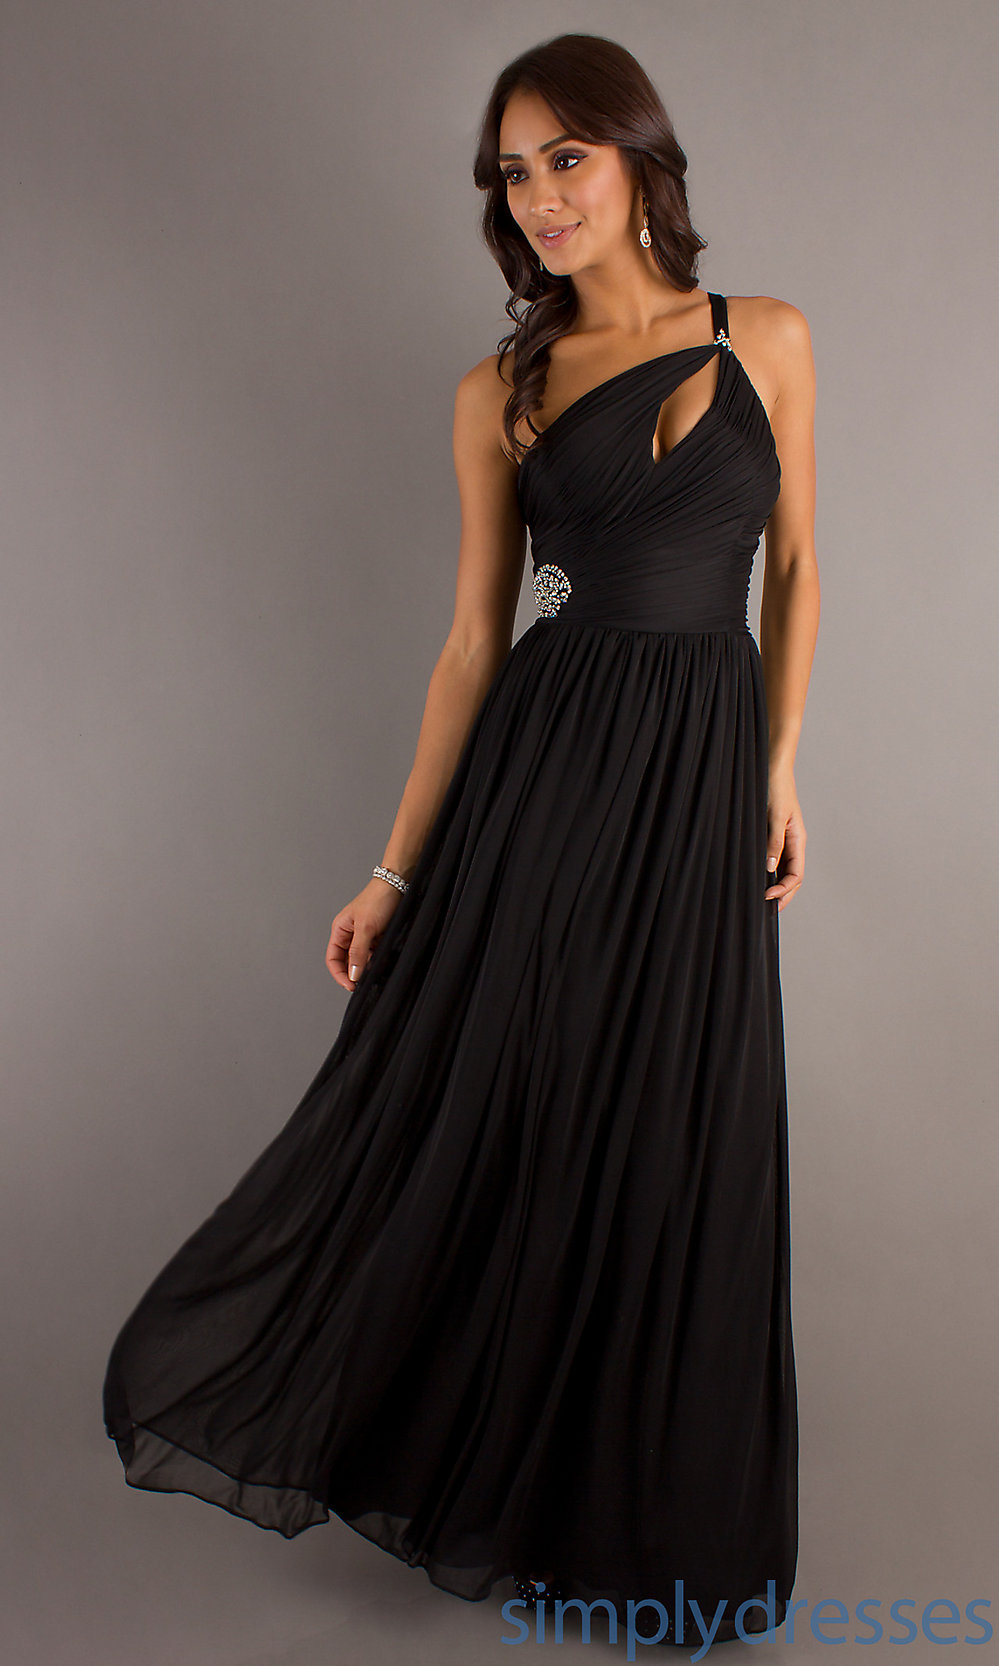 Black Simple Formal Dress & Online Fashion Review - Dresses Ask